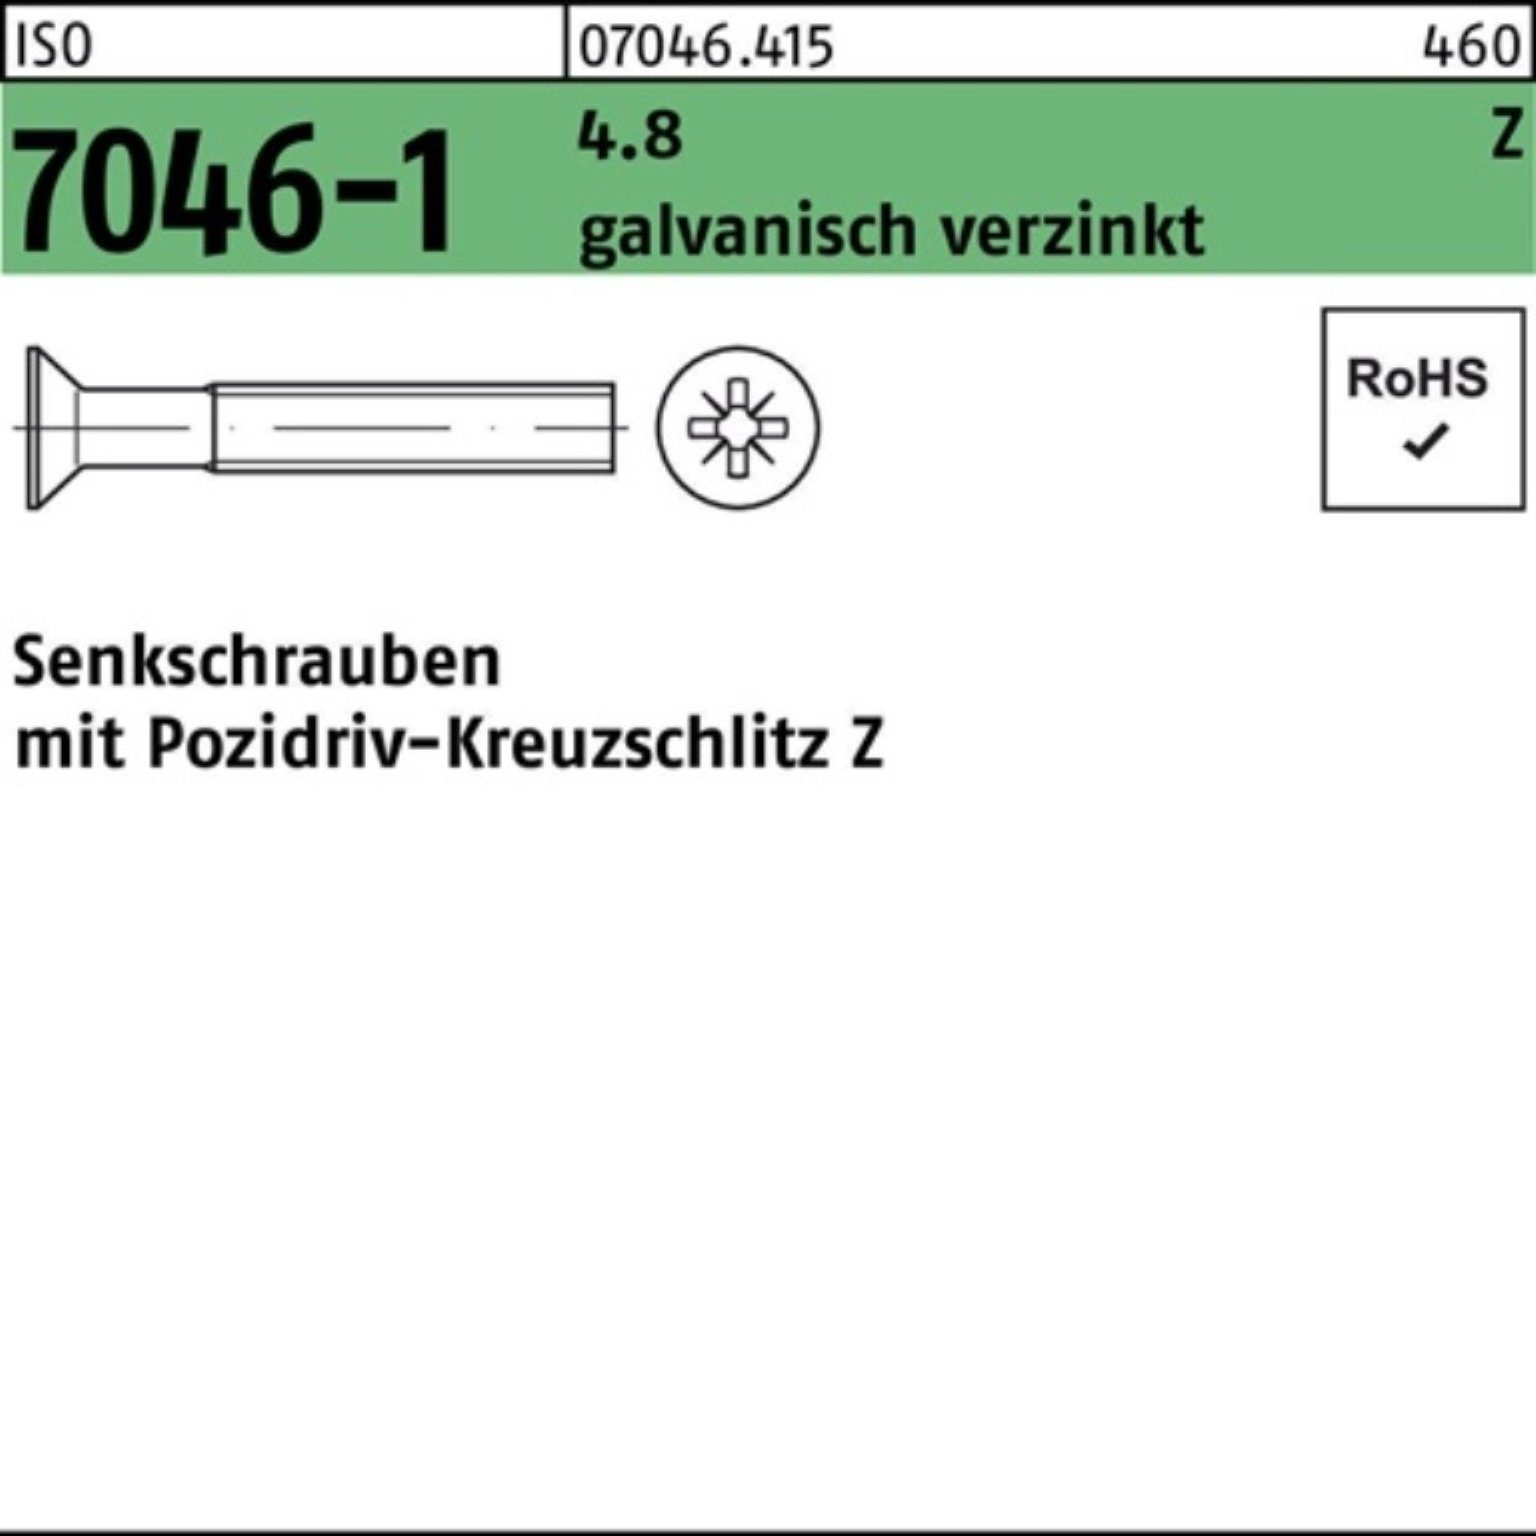 Reyher Senkschraube 200er Pack PZ ISO IS Senkschraube 200St. 7046-1 M5x60-Z 4.8 galv.verz